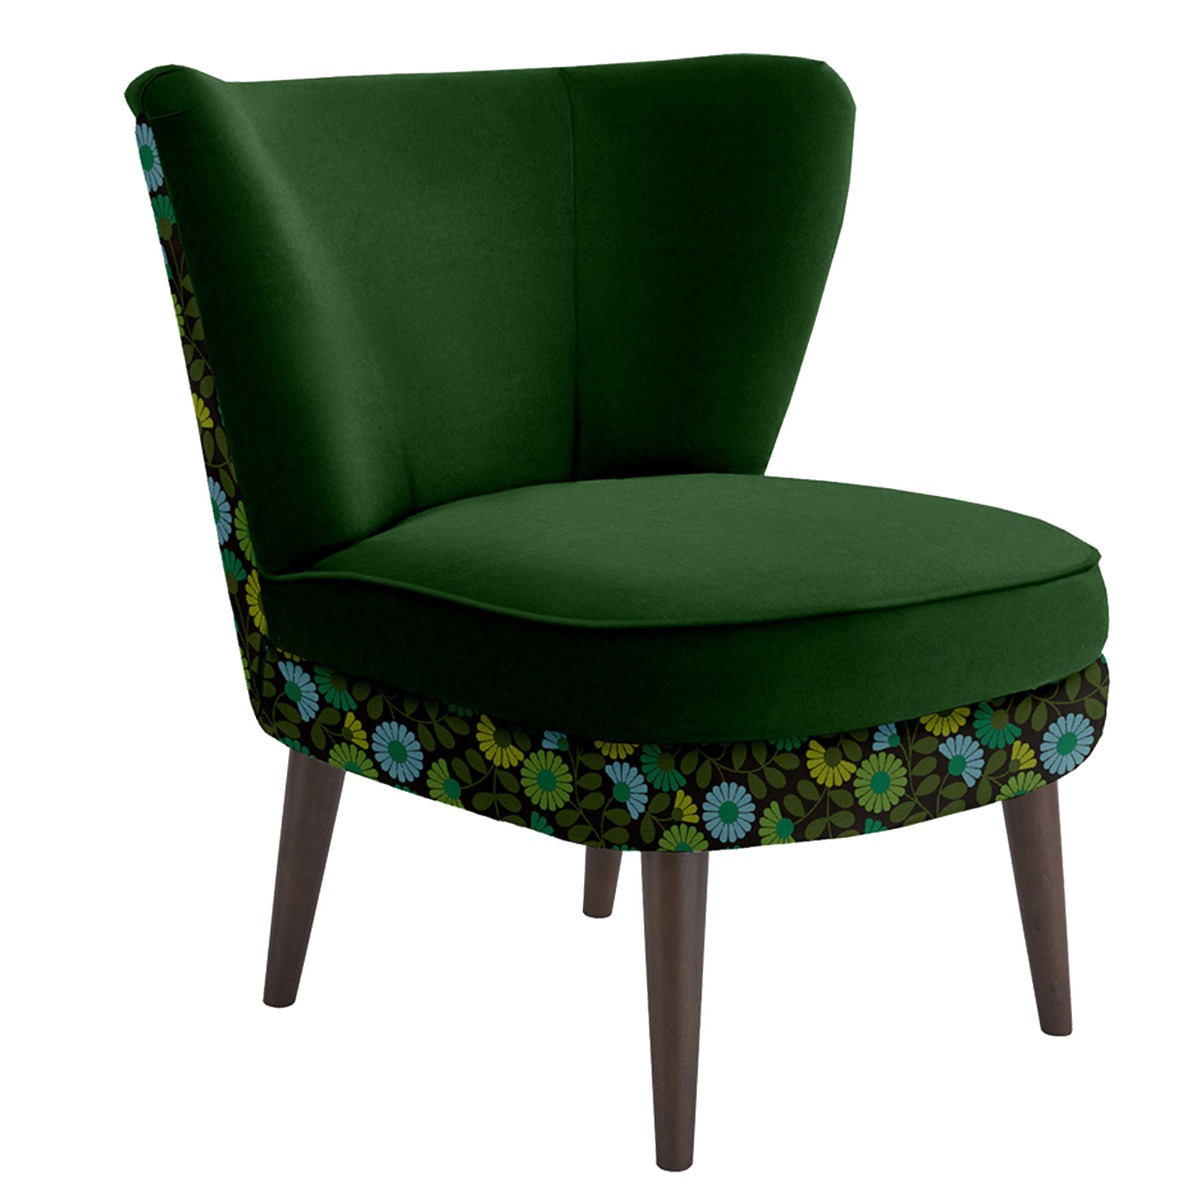 Orla Kiely Una Chair, Green Fabric | Barker & Stonehouse